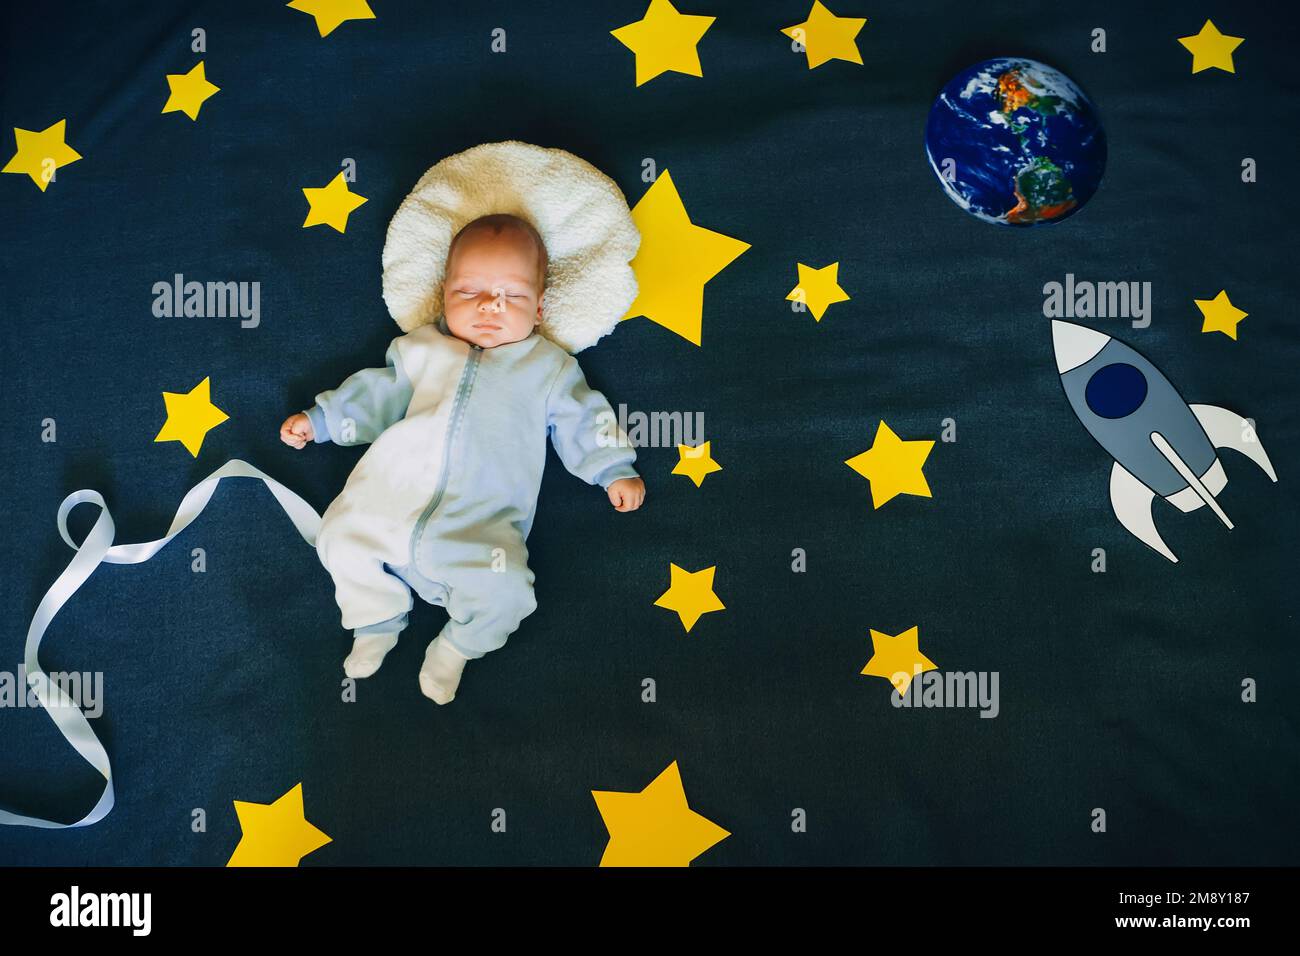 Profile image of cute boy and night sky background Stock Photo - Alamy